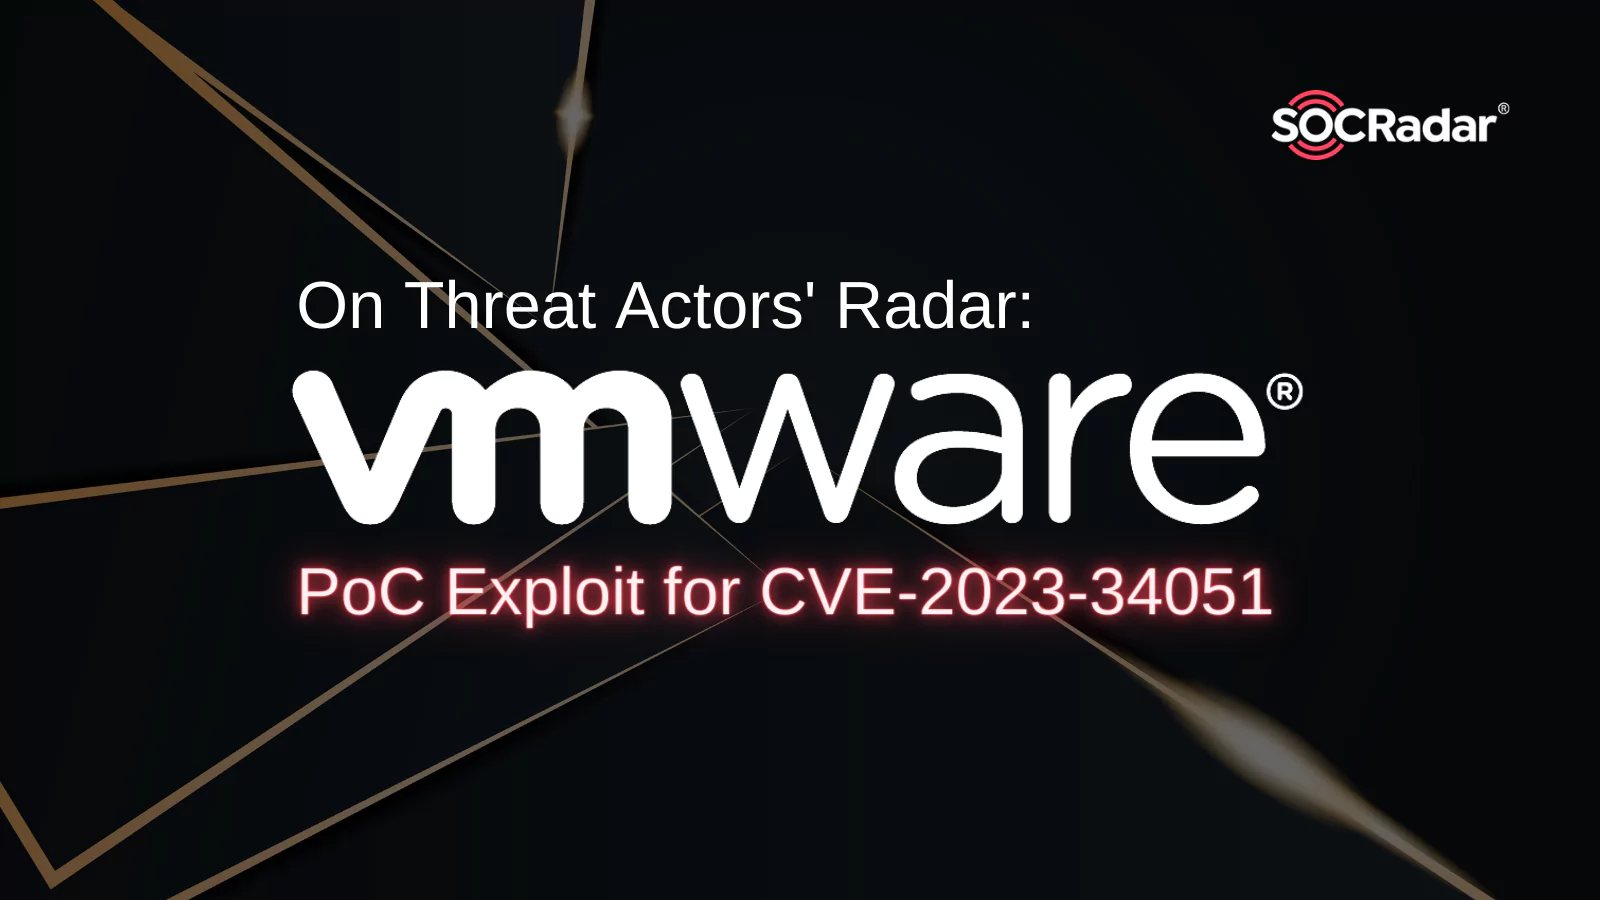 SOCRadar® Cyber Intelligence Inc. | On Threat Actors' Radar: PoC Exploits for VMware Aria Operations Vulnerability (CVE-2023-34051), and More